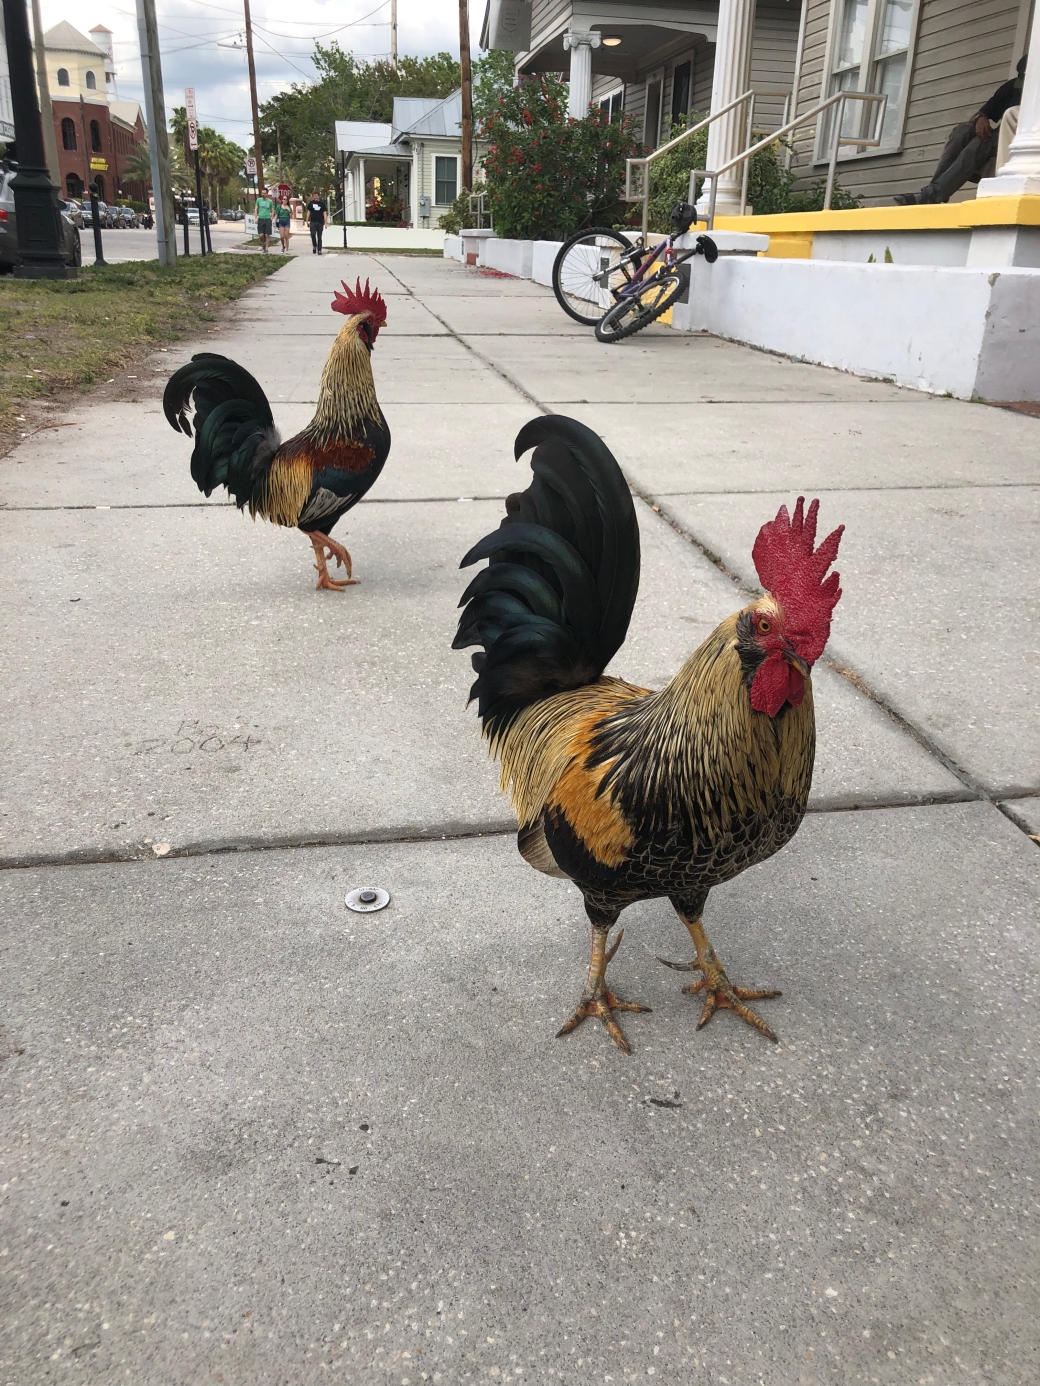 City Chickens